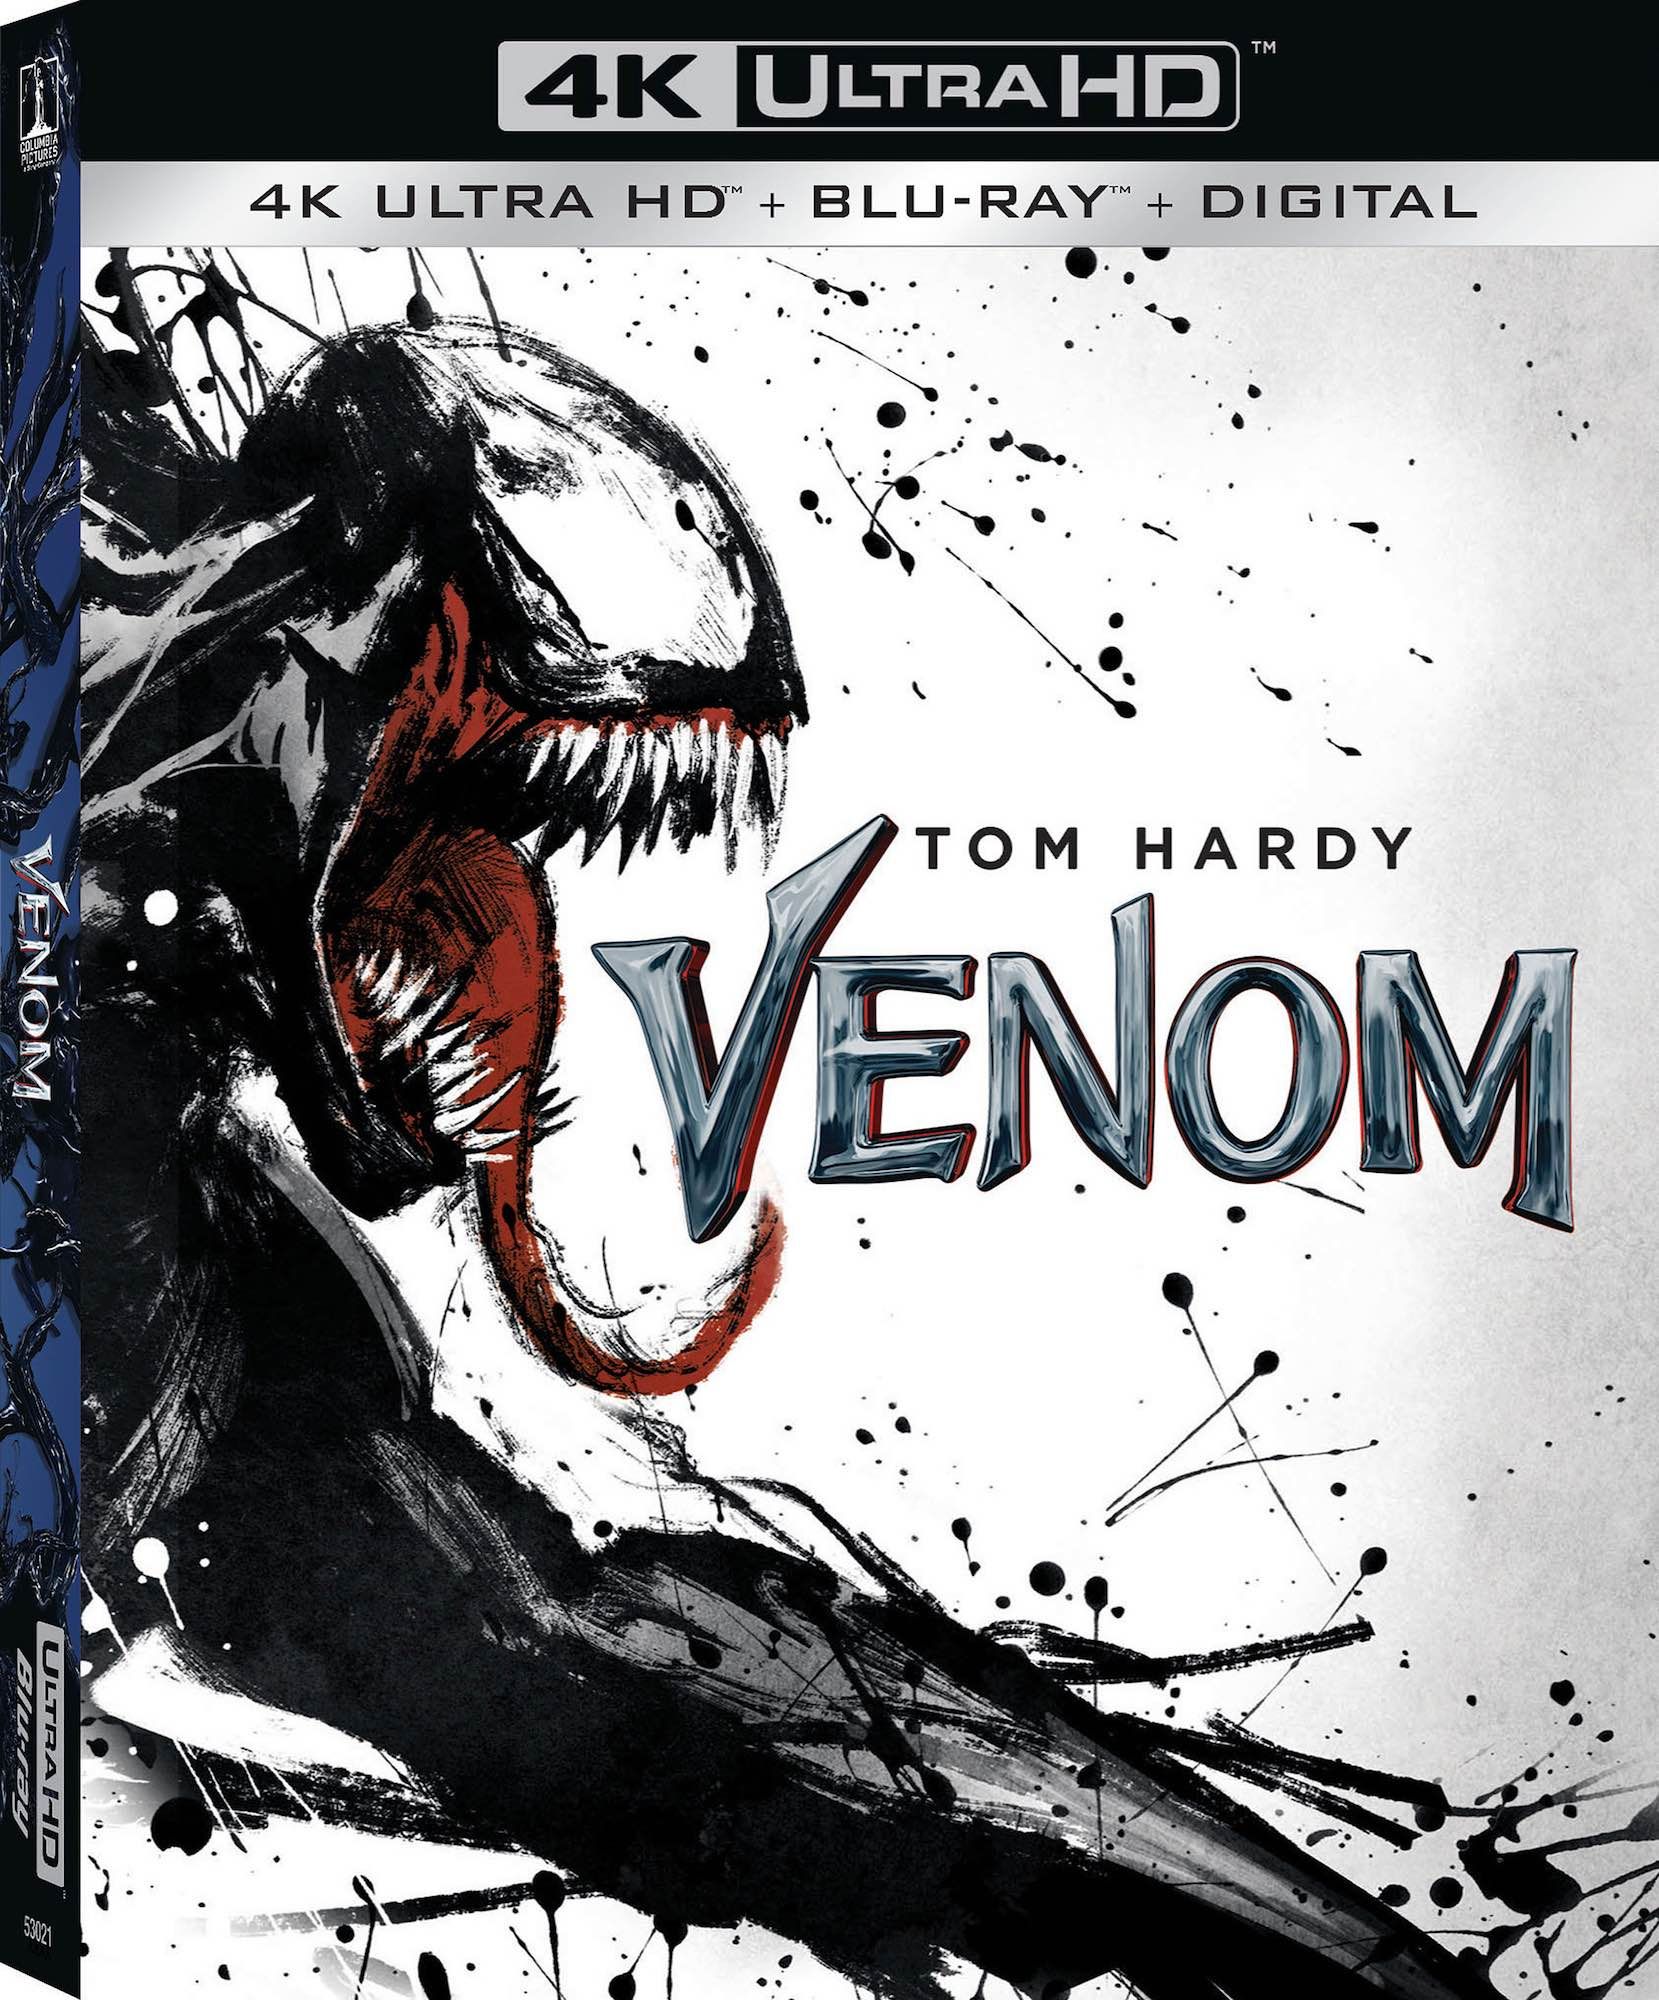 Venom 4K Ultra HD Blu-ray Cover